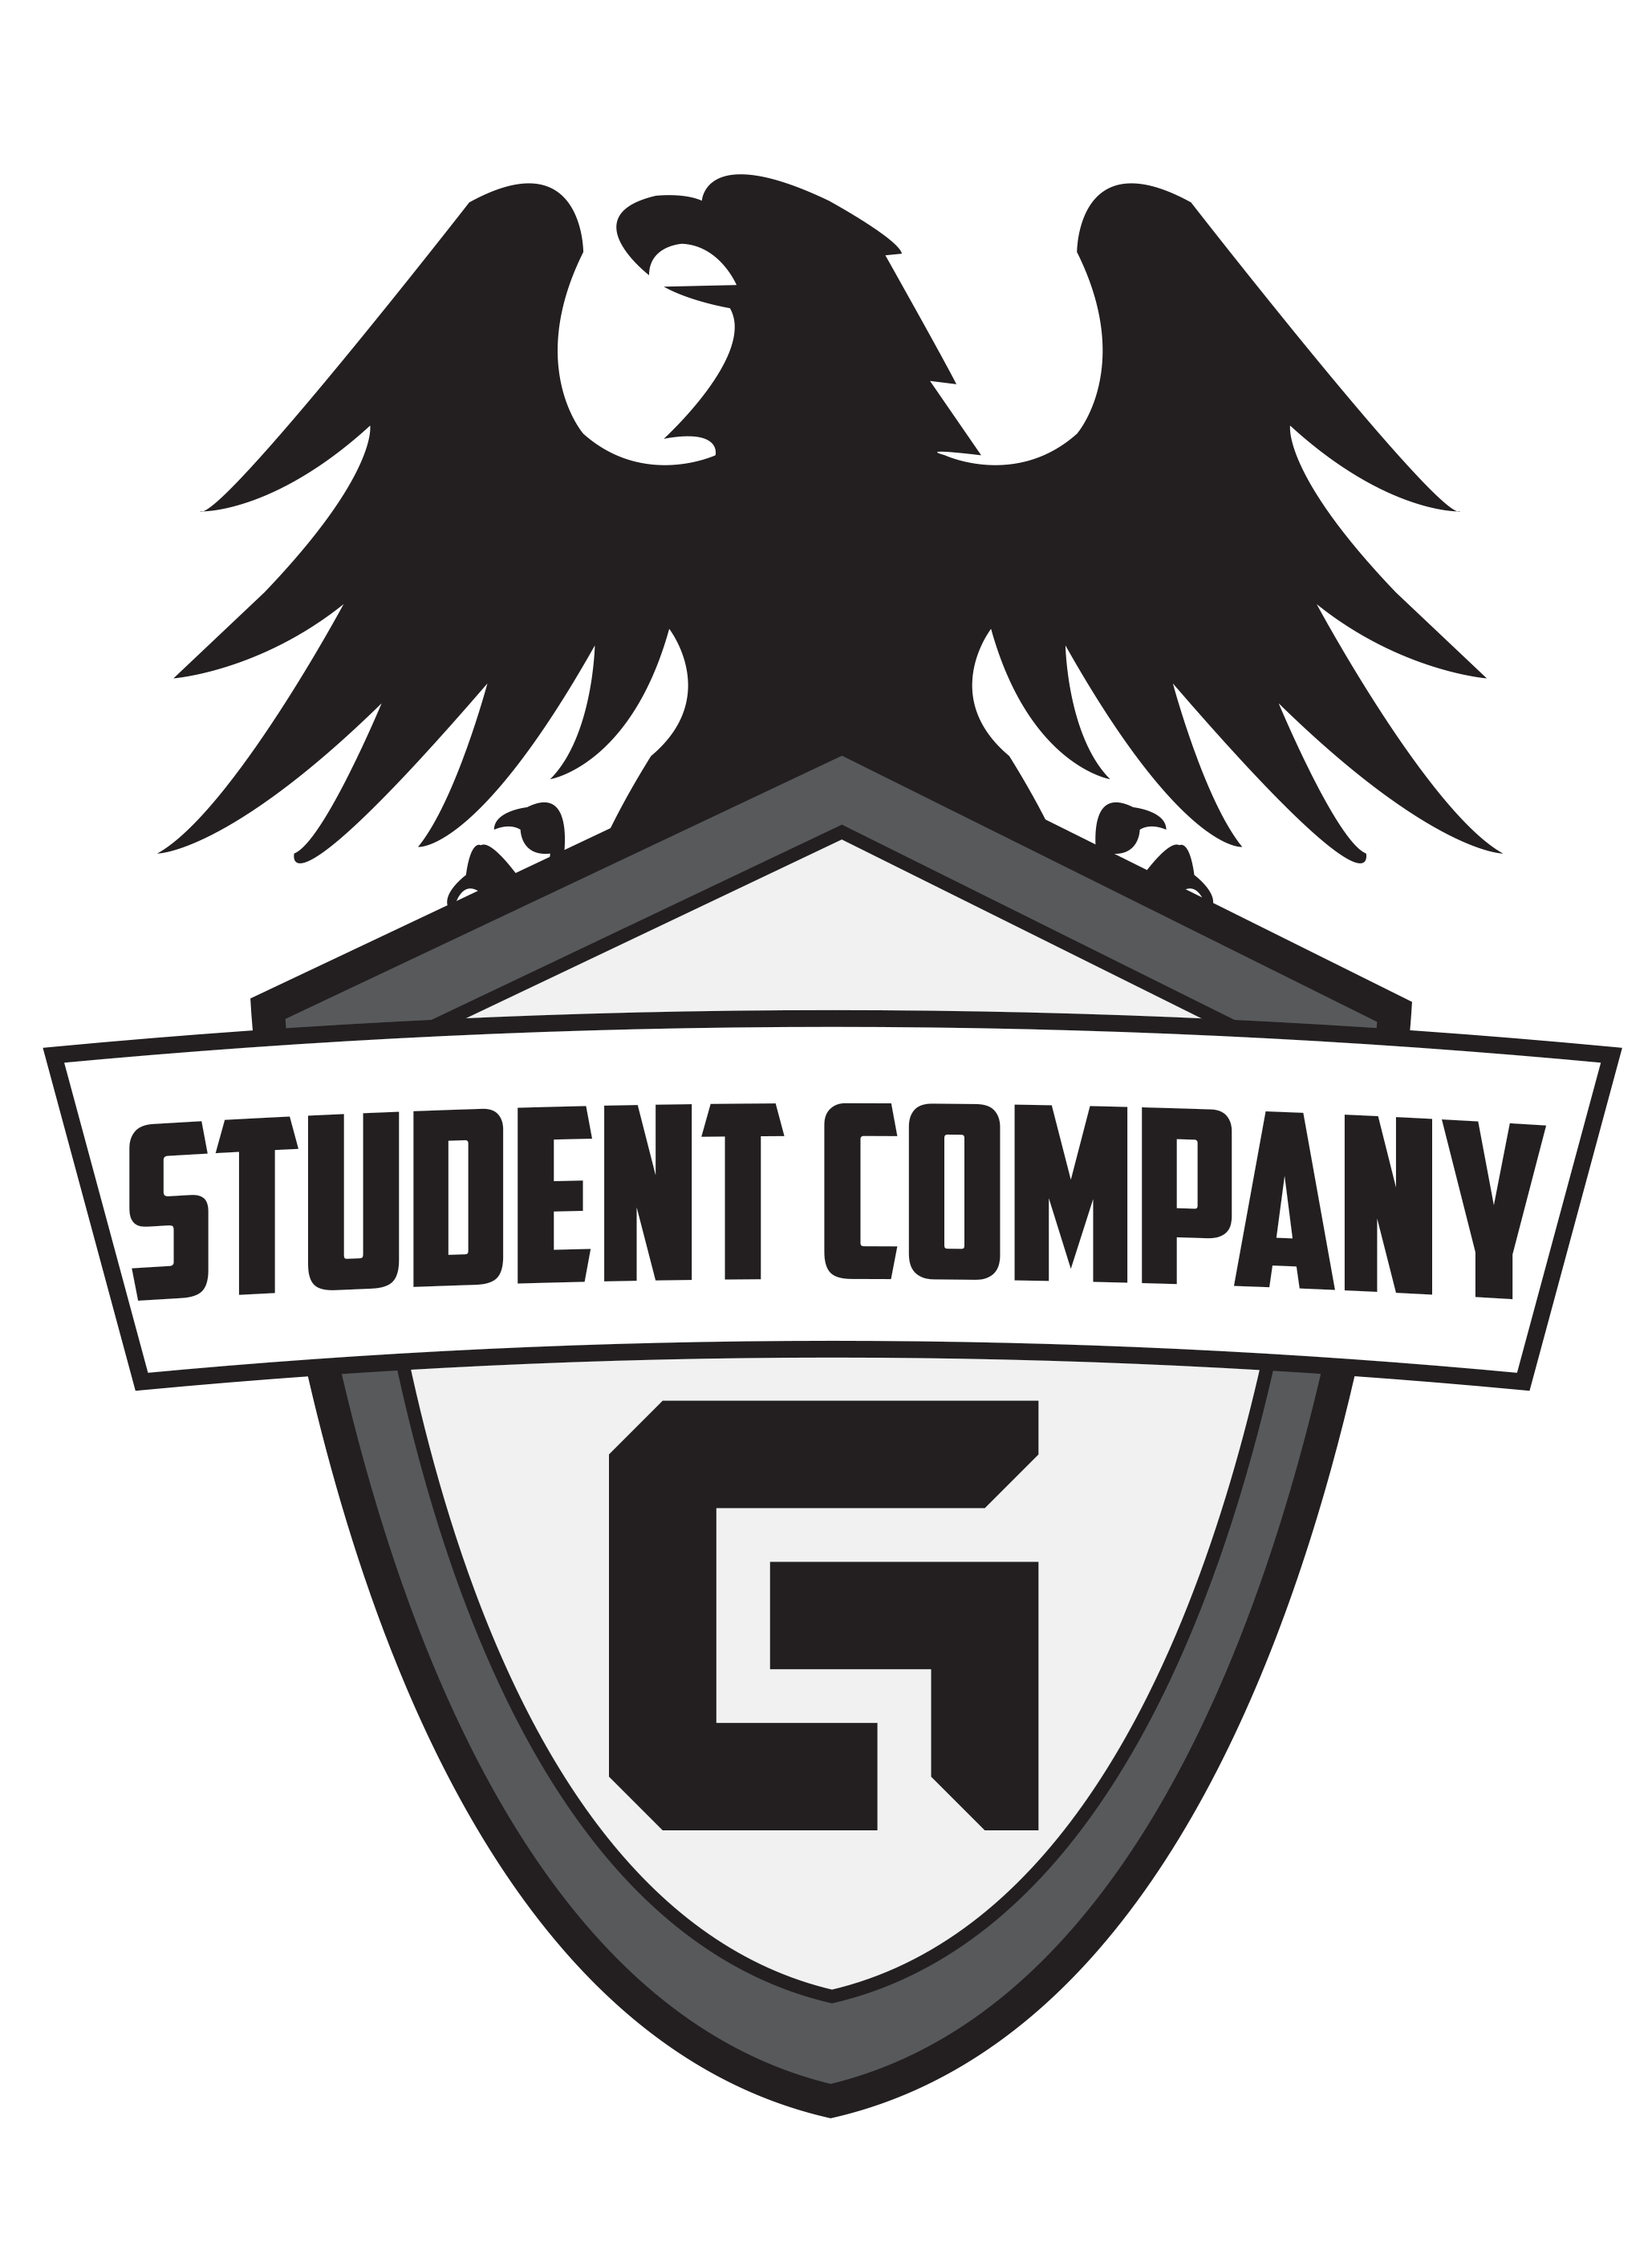 Student company